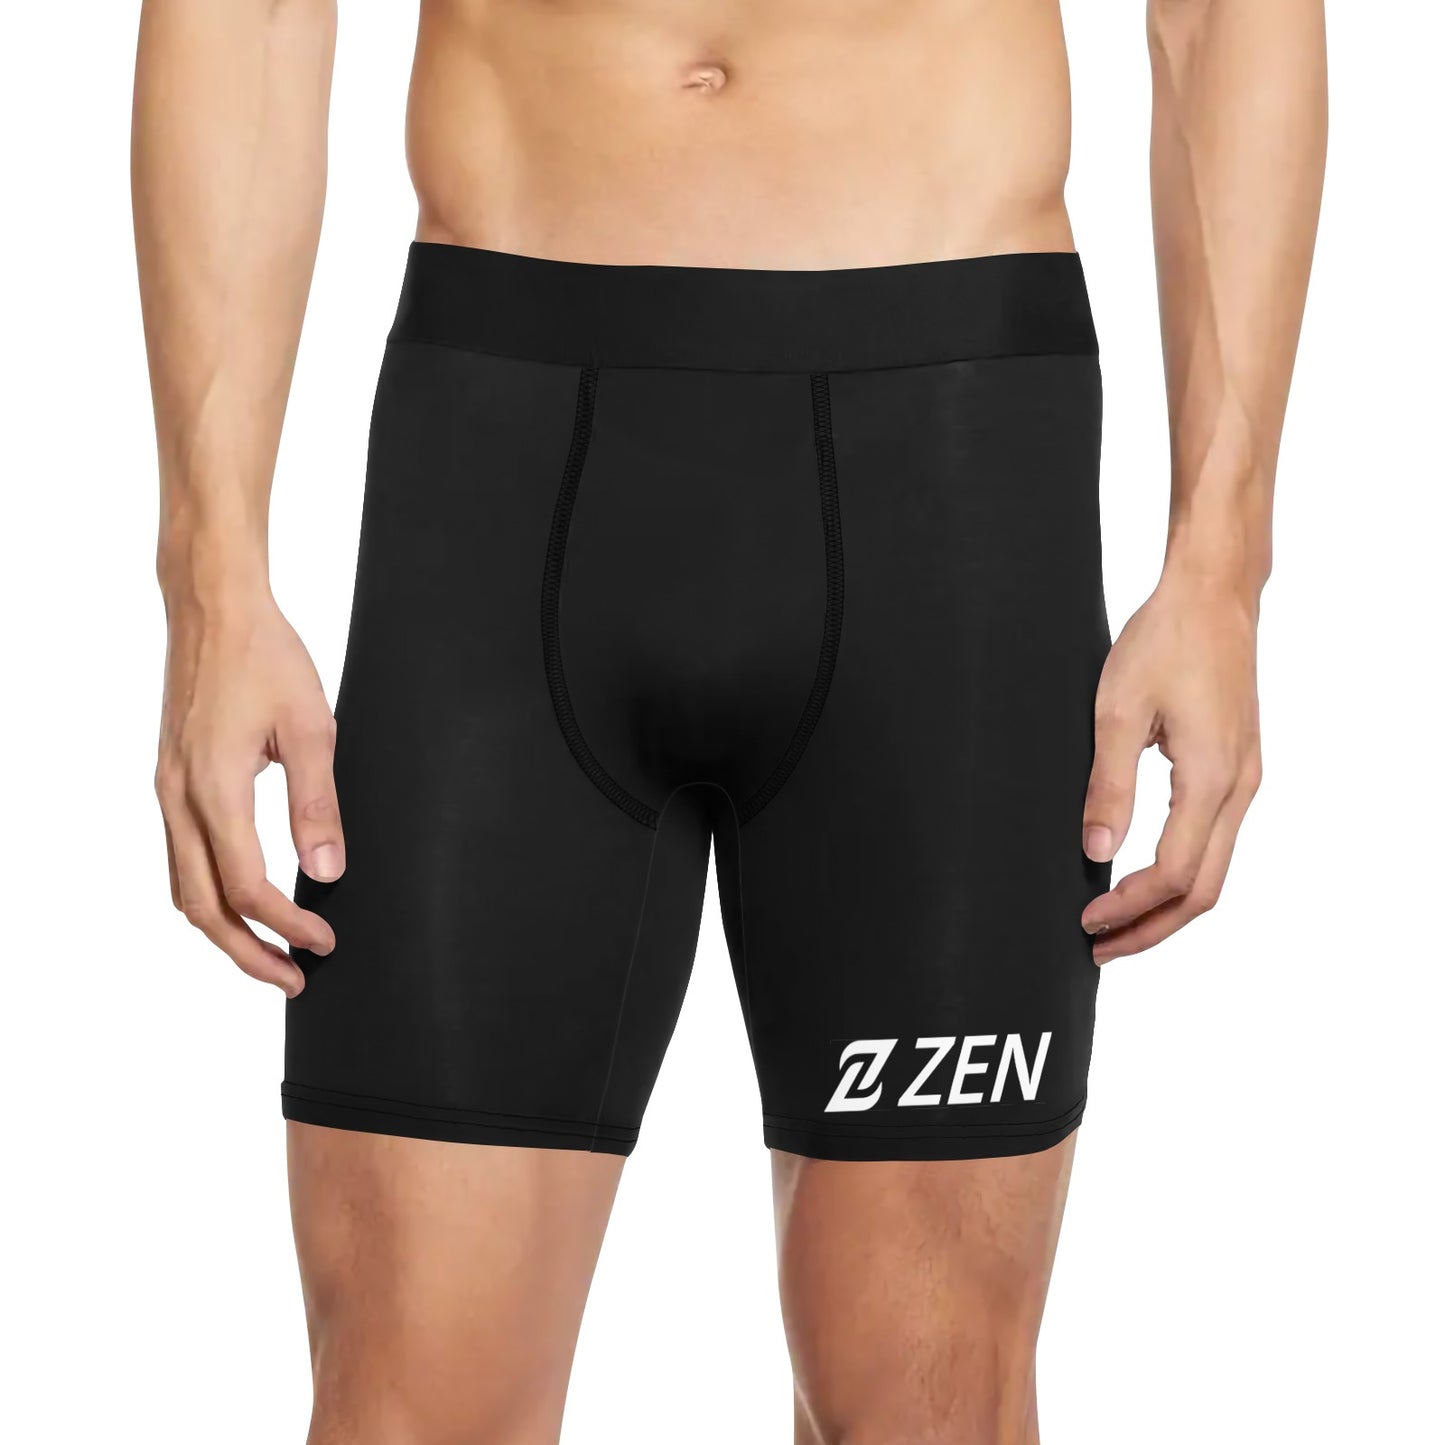 Zen Boxers Long - Black